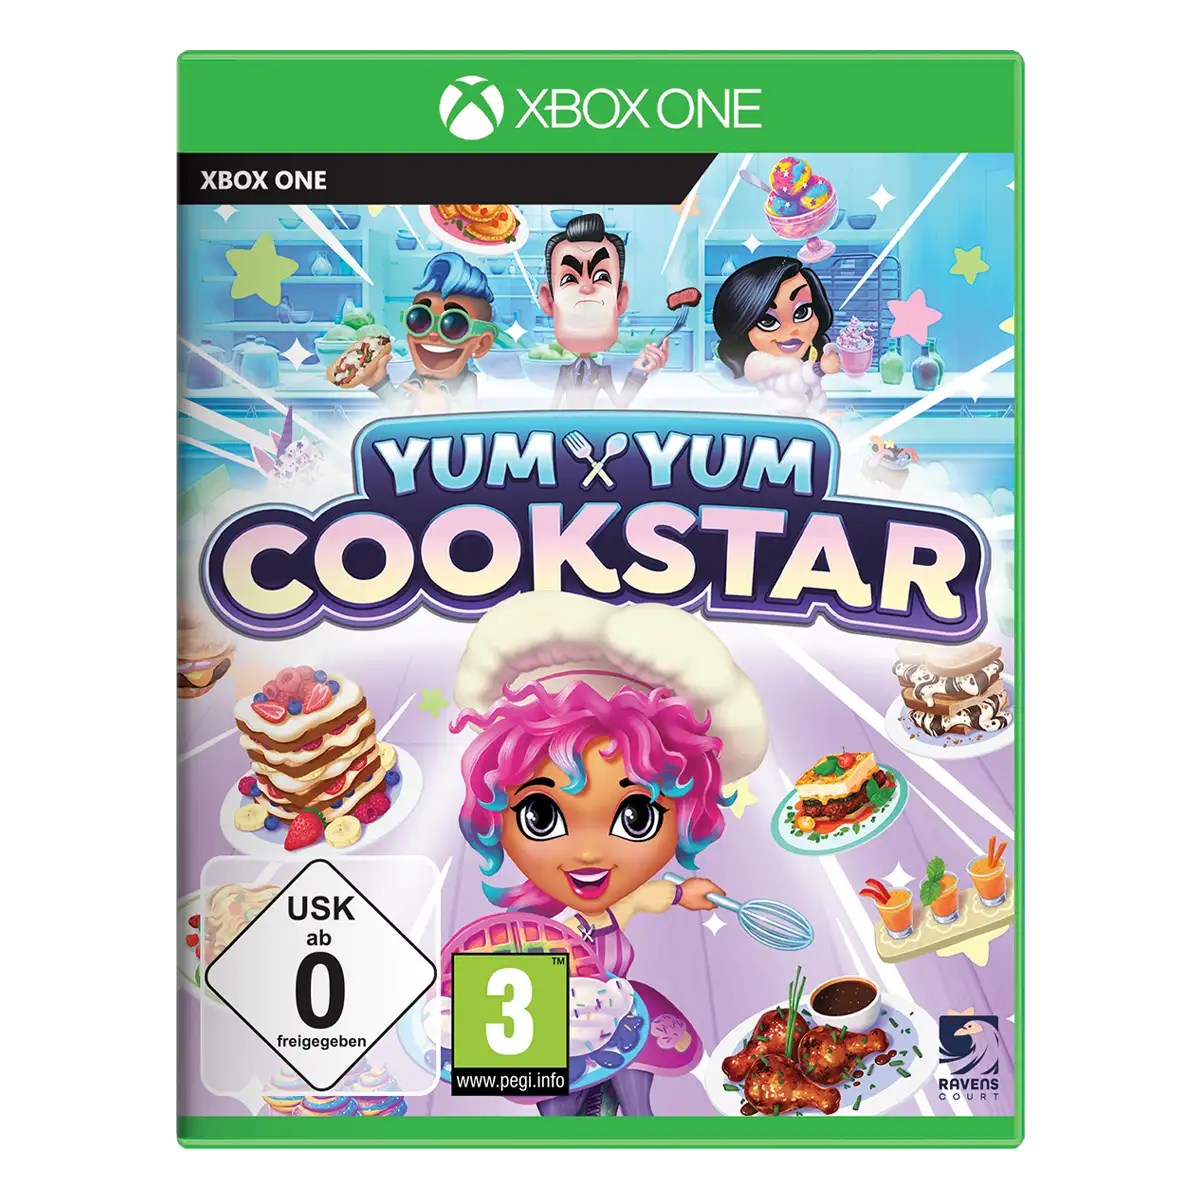 Yum Yum Cookstar (Xbox One) Cover